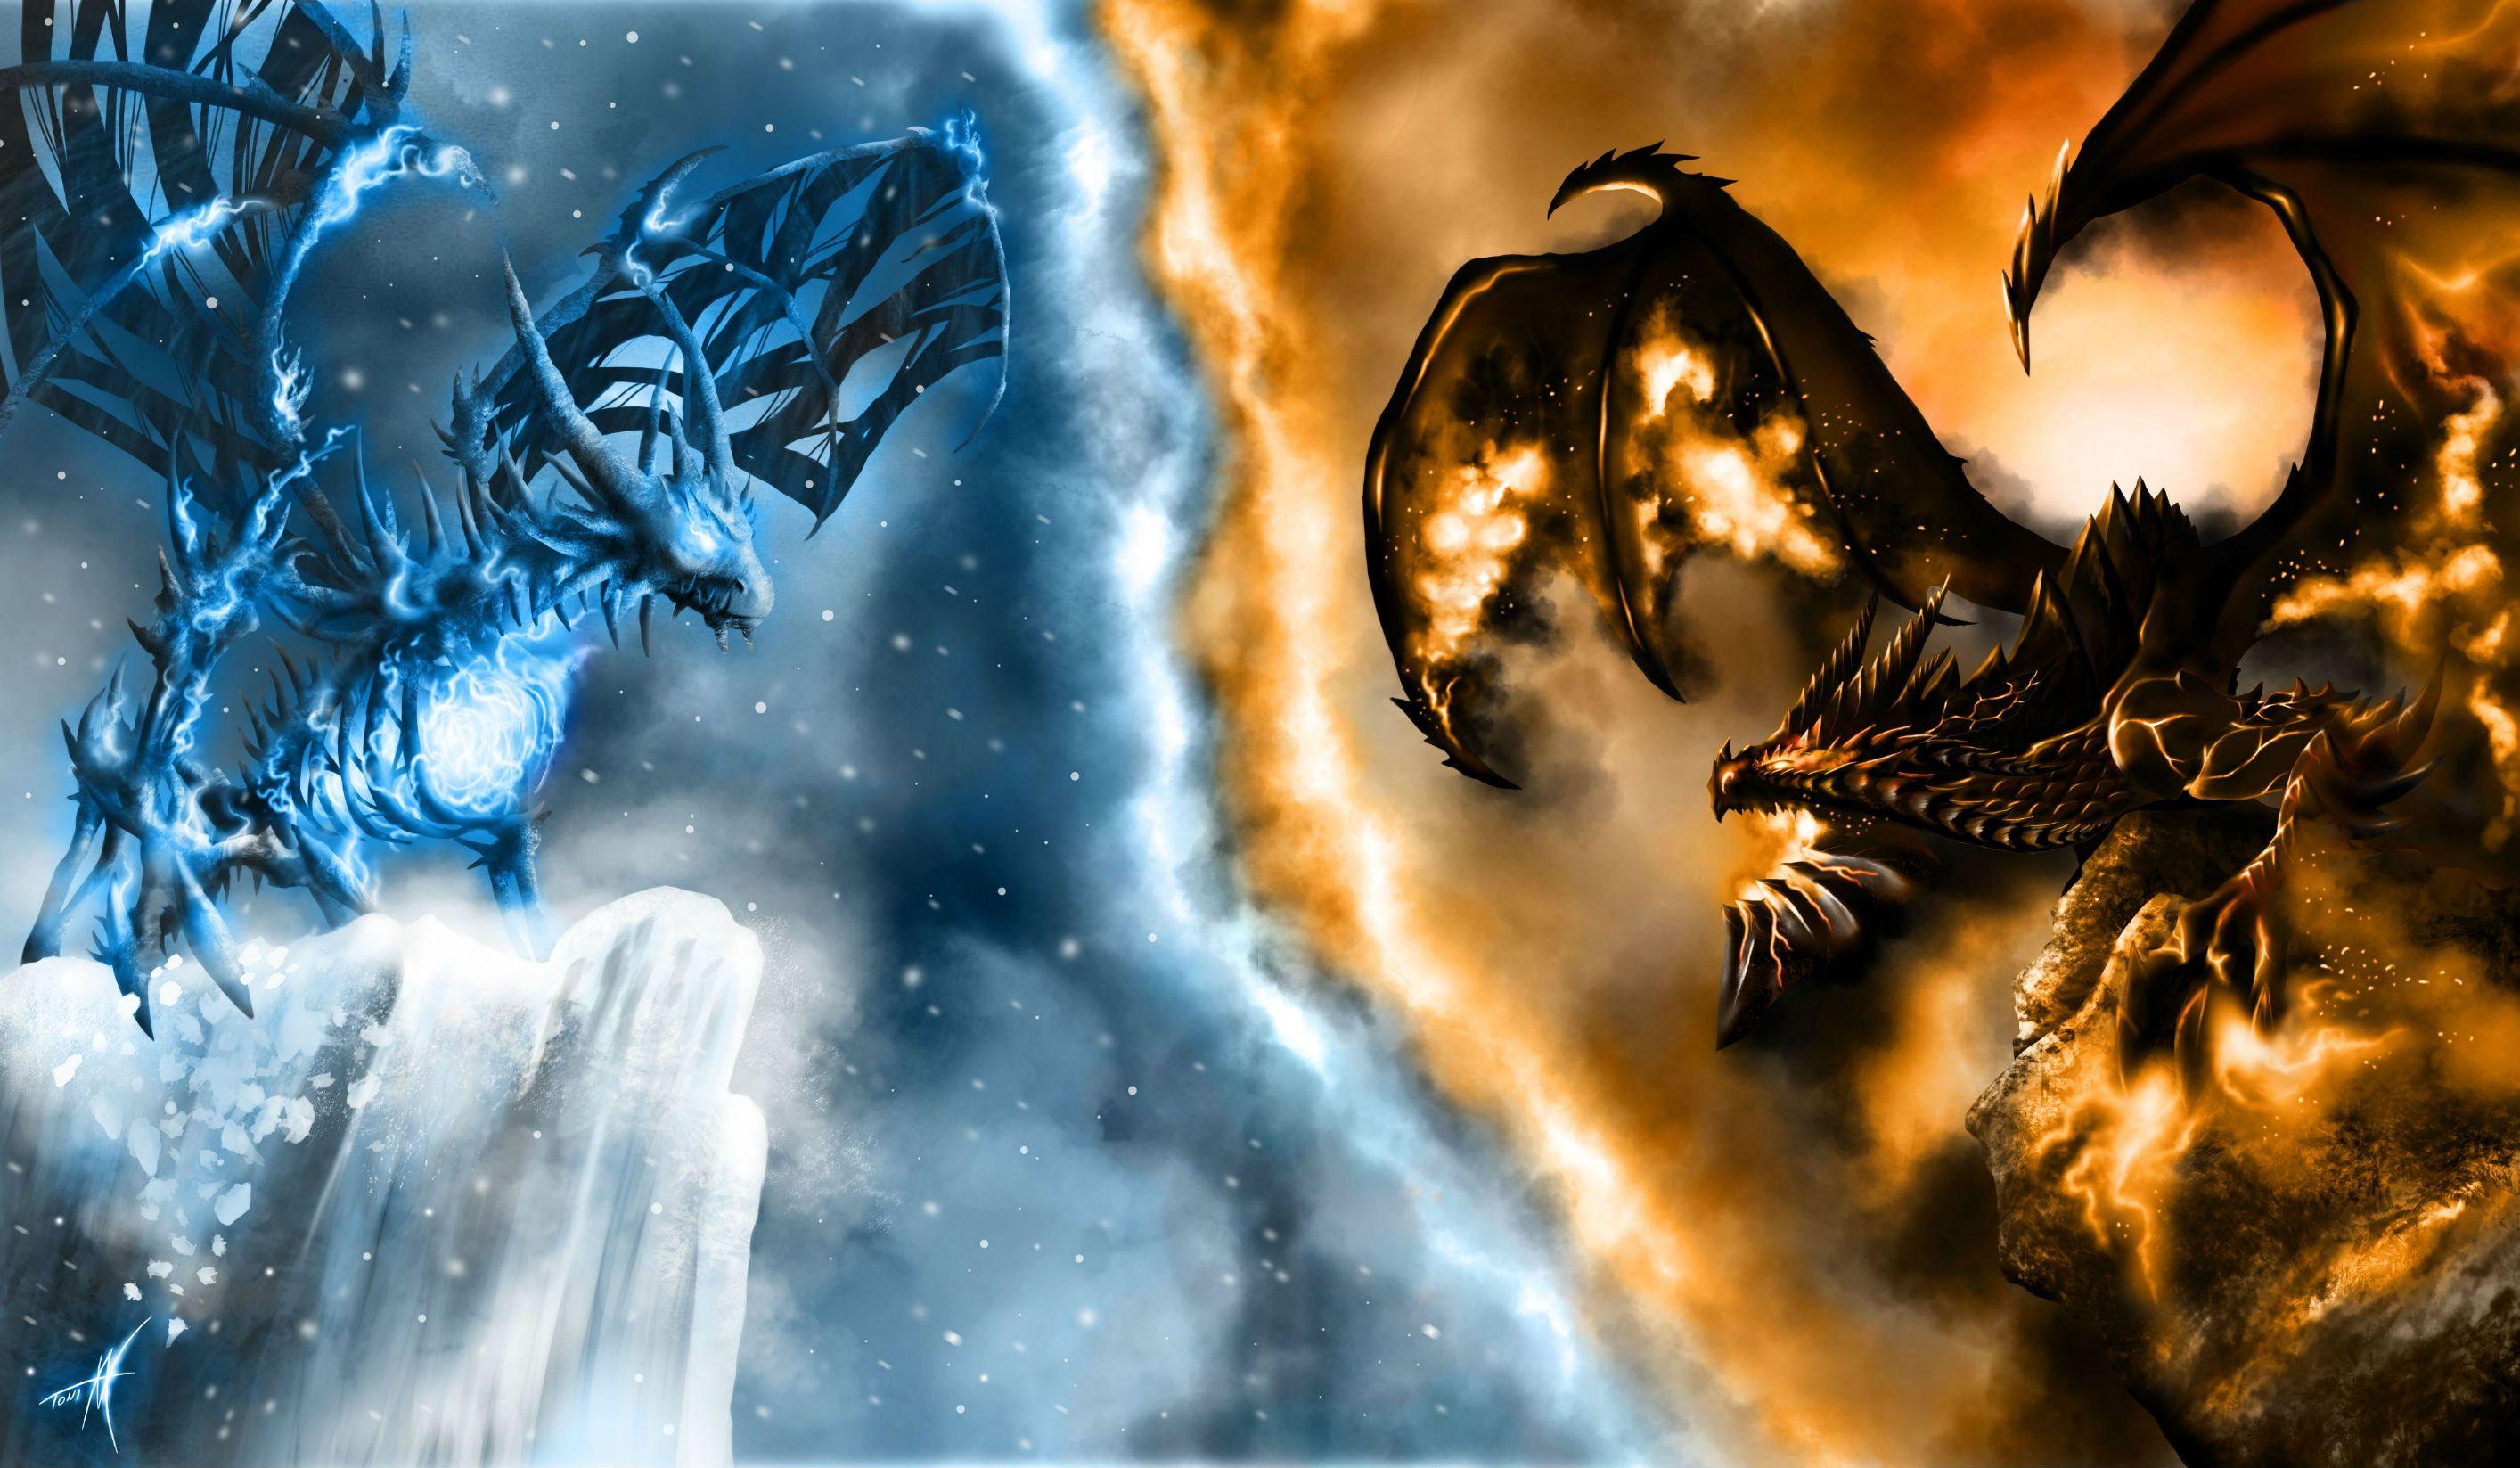 World of WarCraft WoW Dragons Fire Snow Games dragon ice fantasy wallpaperx1647. Ice dragon, Fire dragon, Dragon image